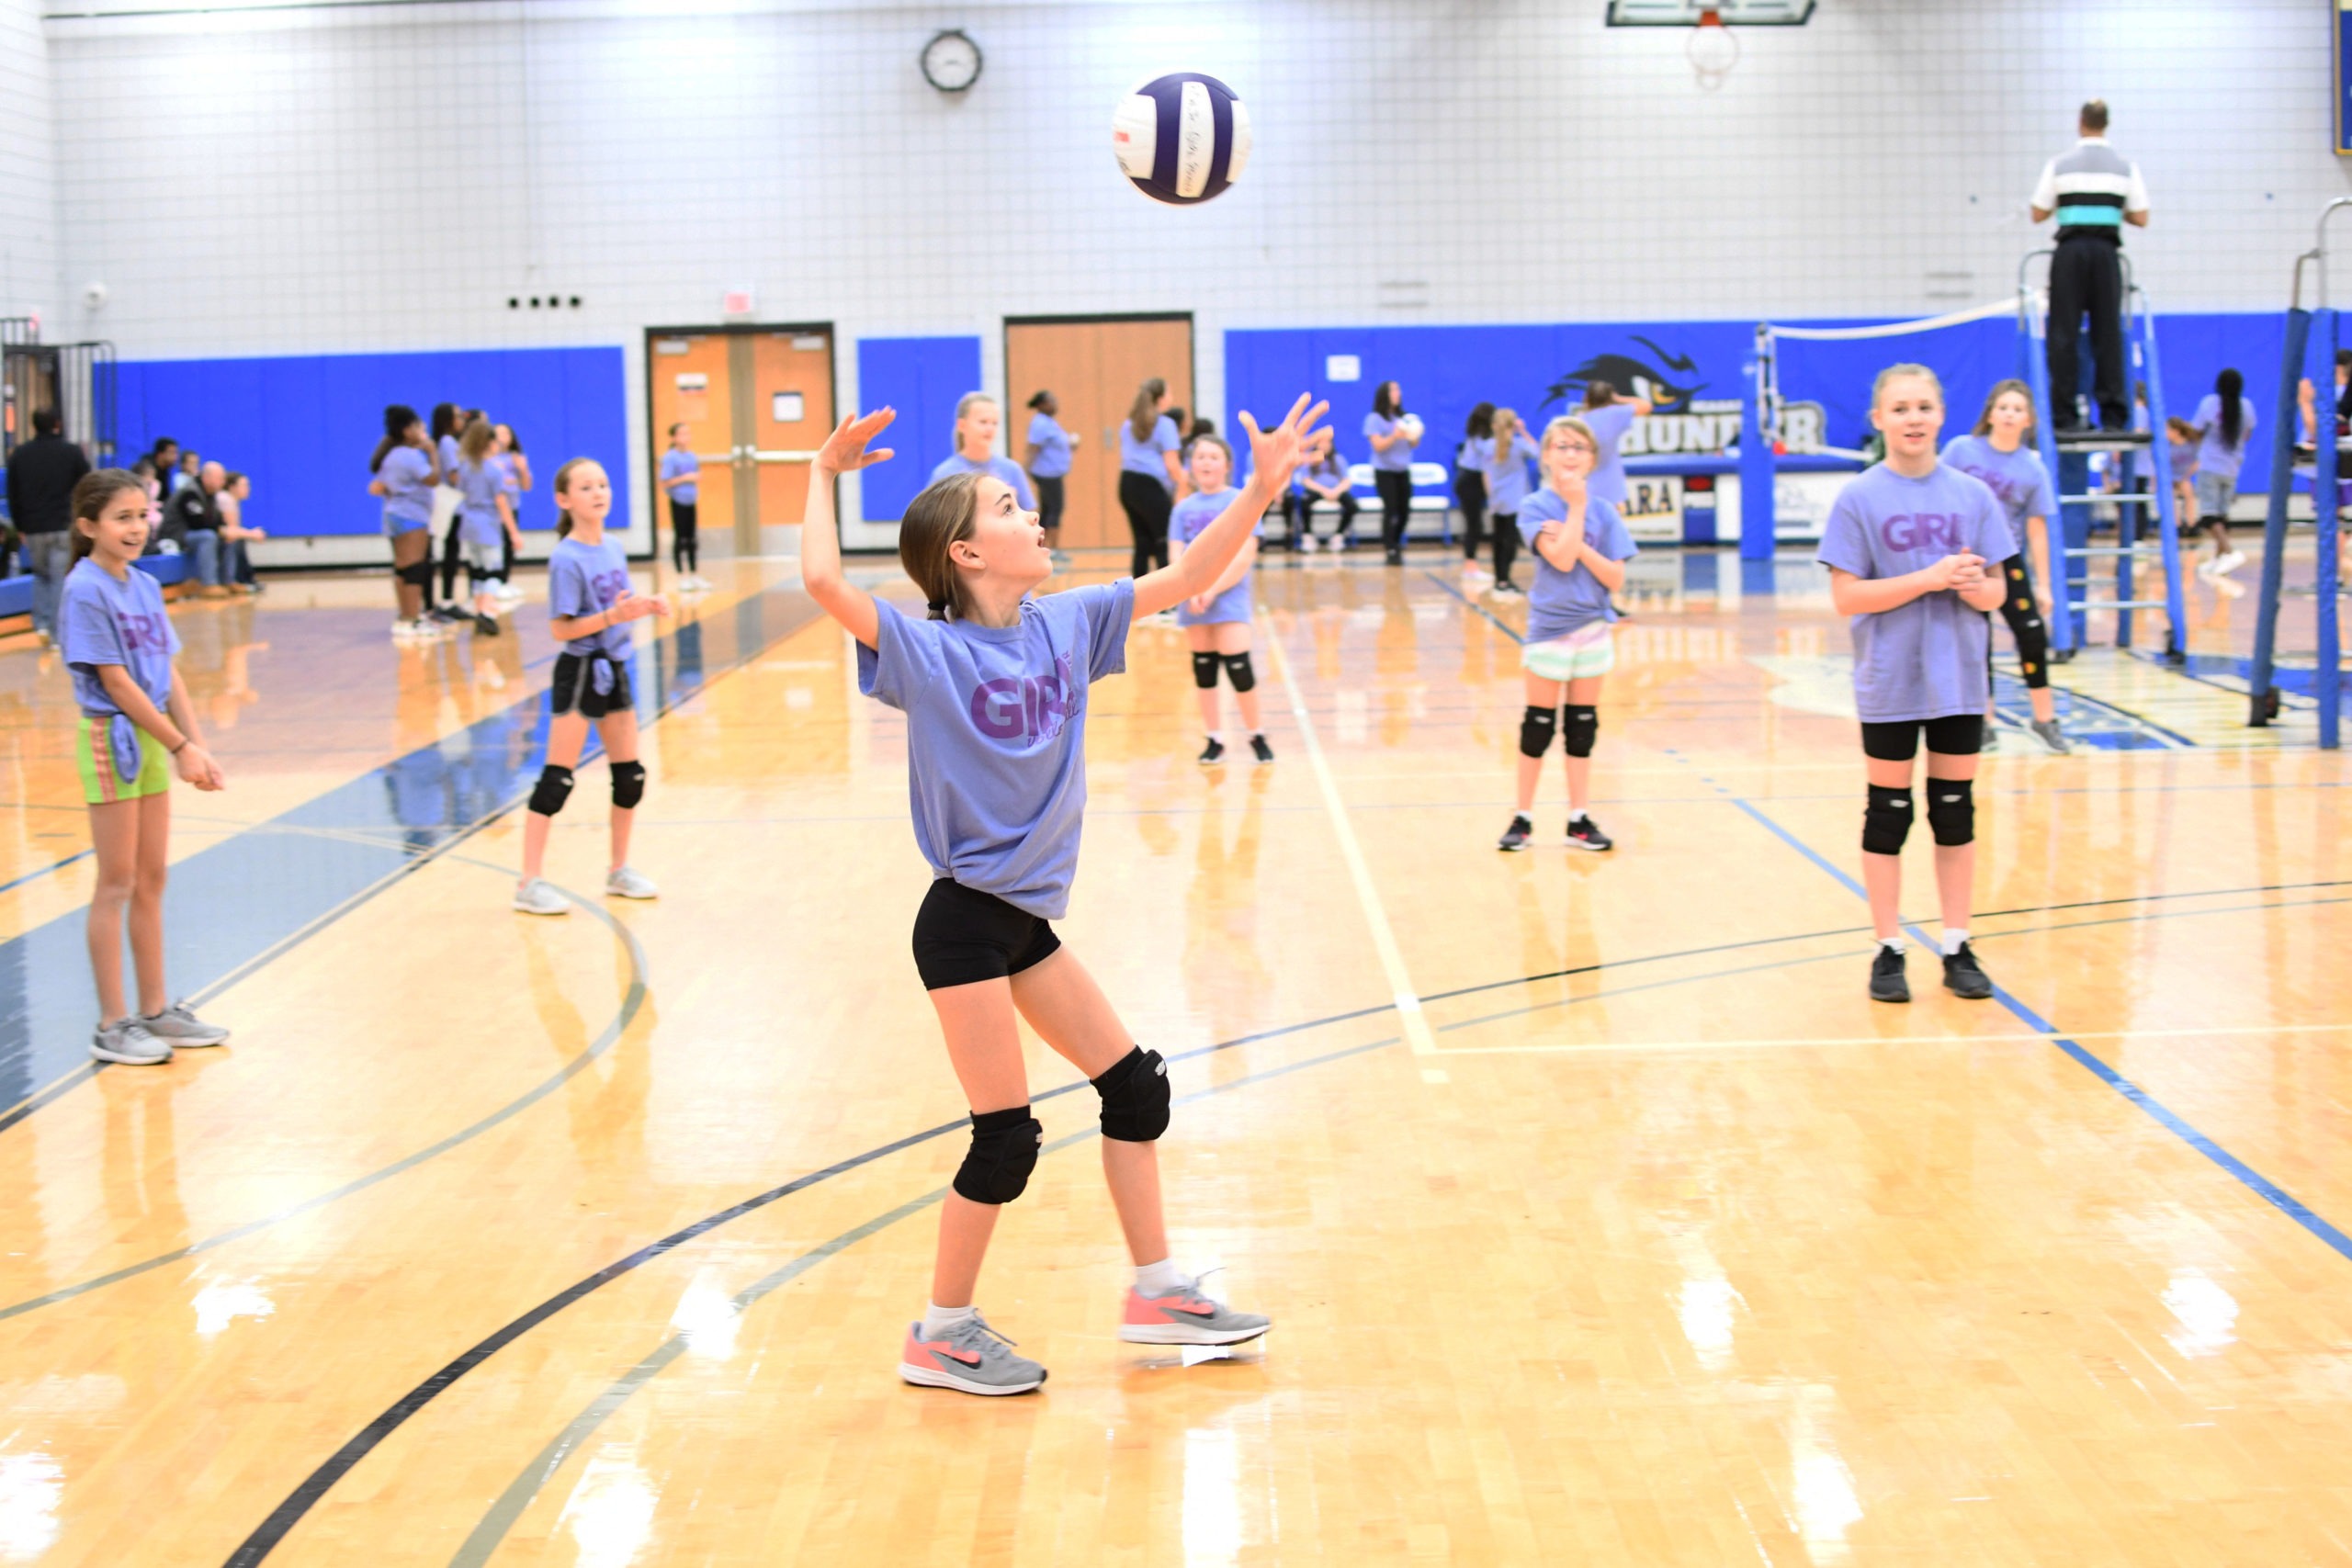 Girl Power Volleyball Tournament Held at SUNY Niagara